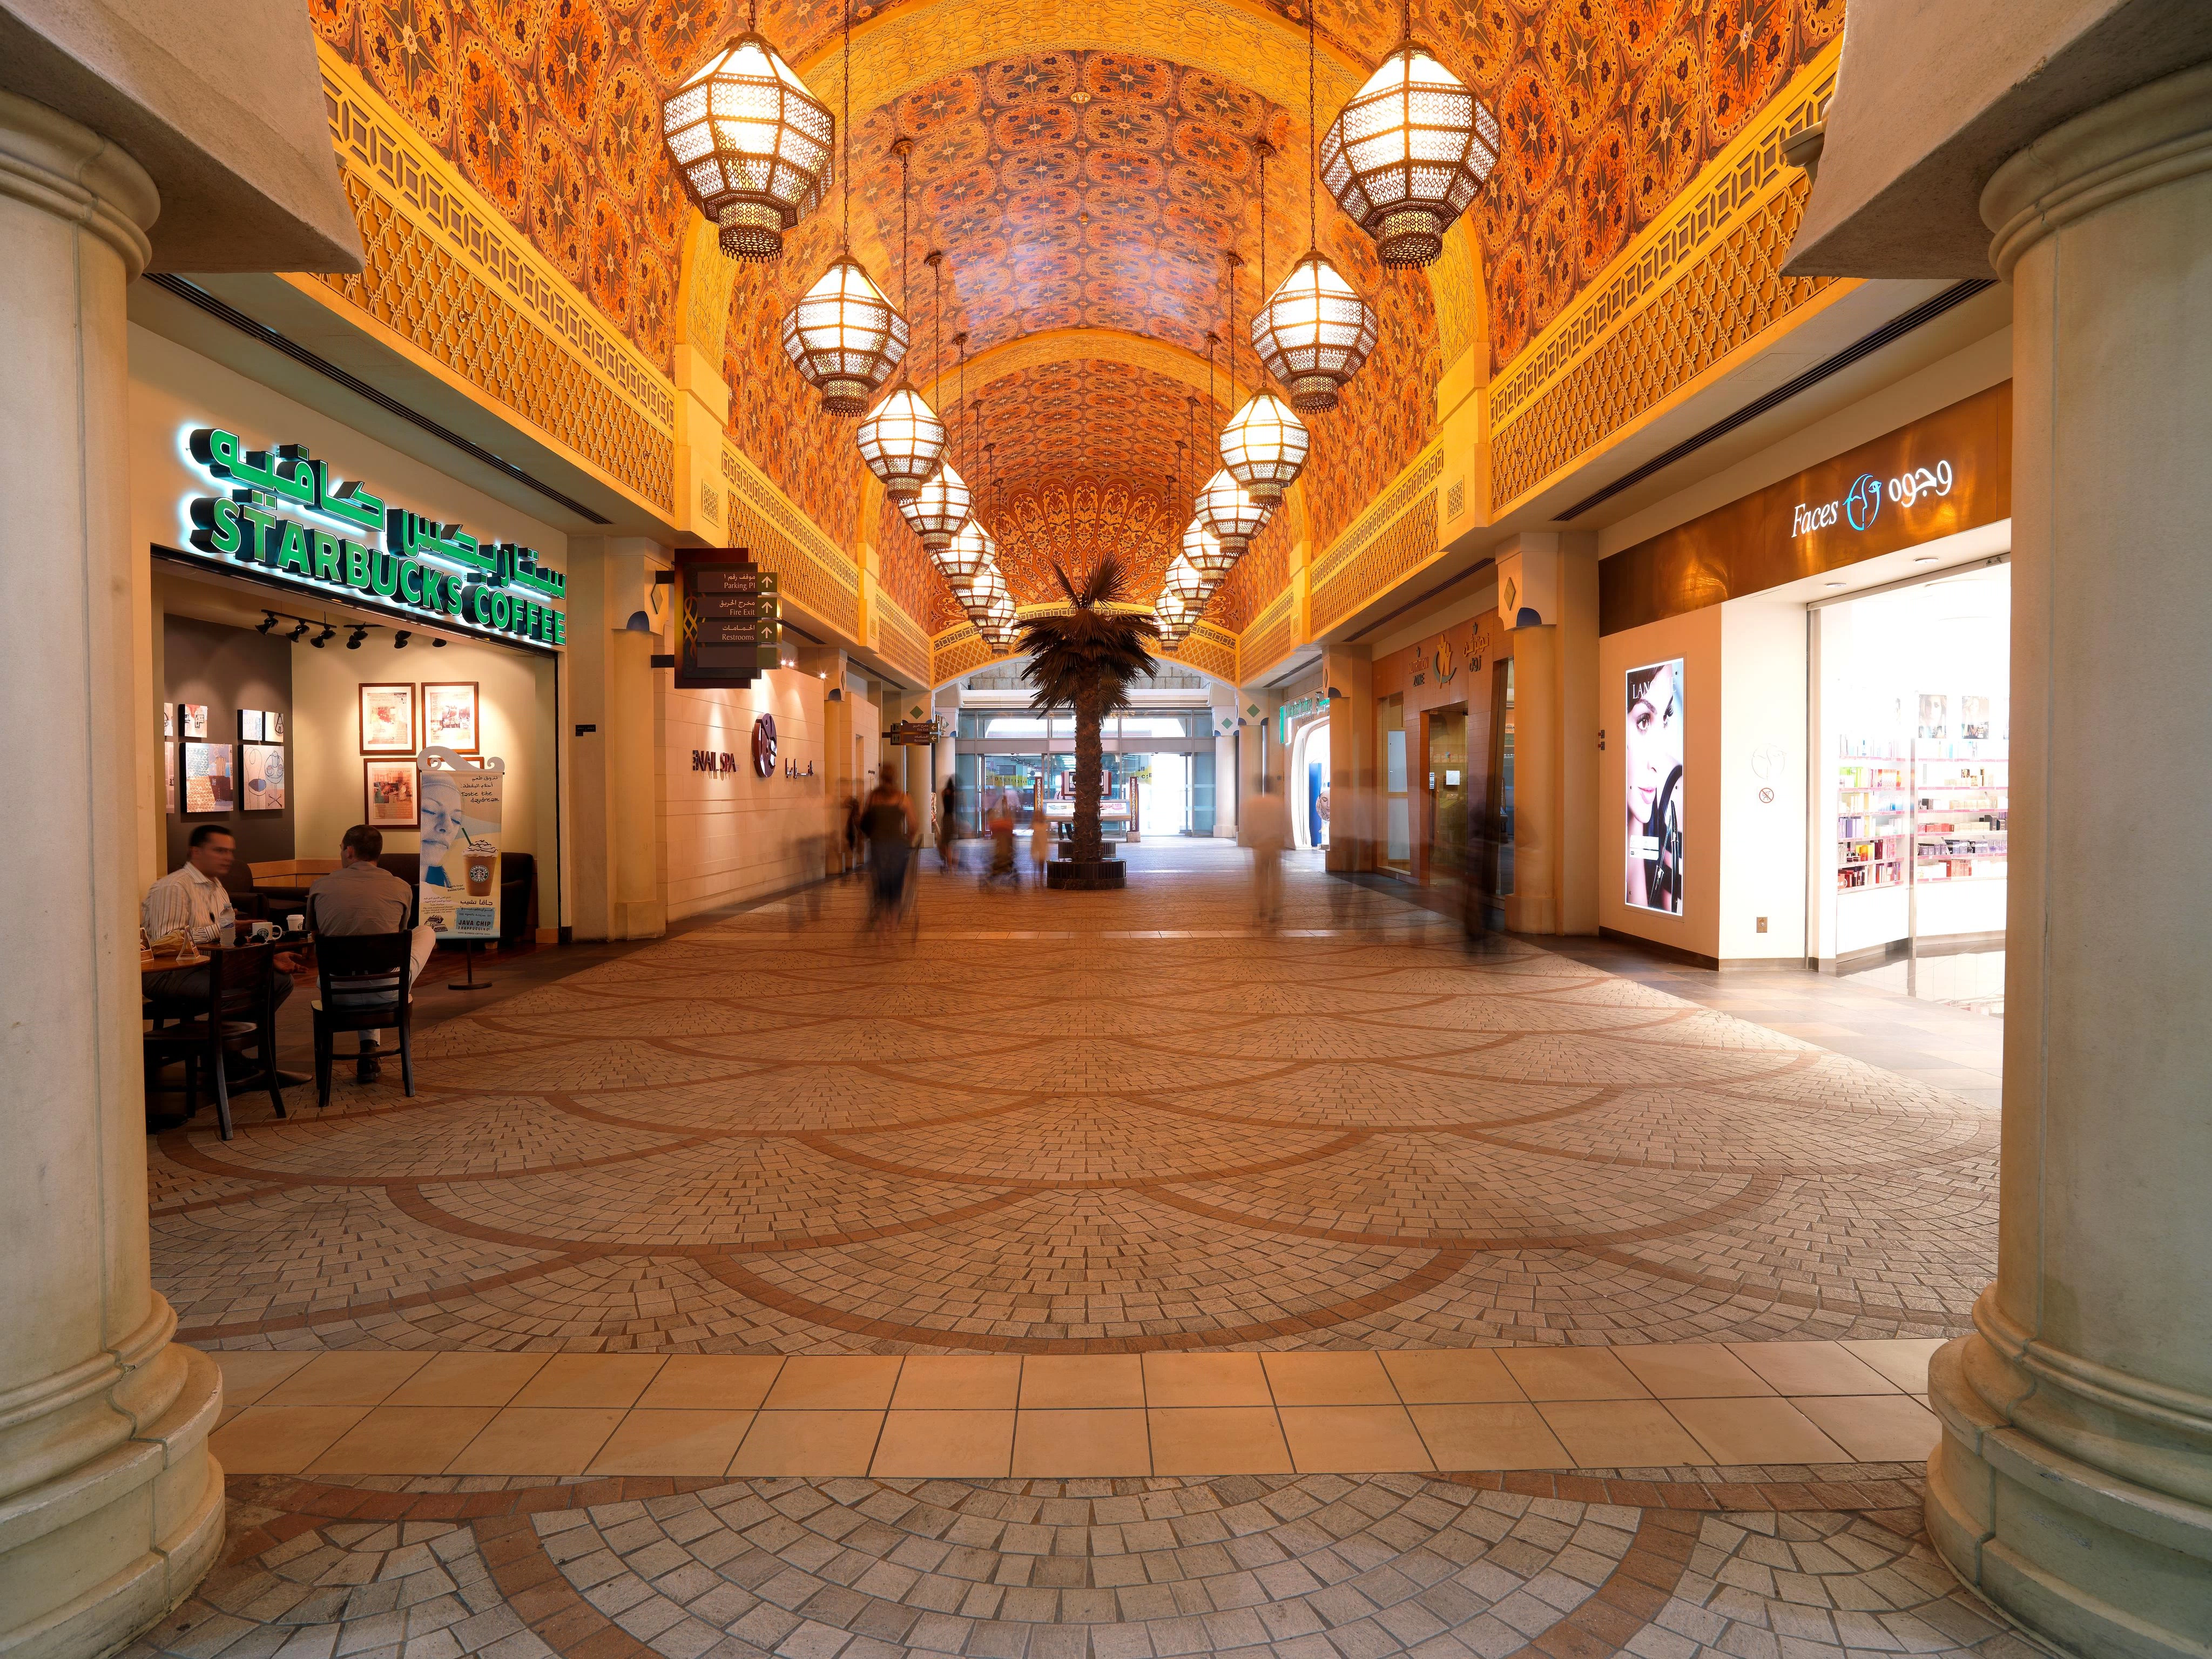 AtlasConcorde IBN Battuta Mall UAE 007